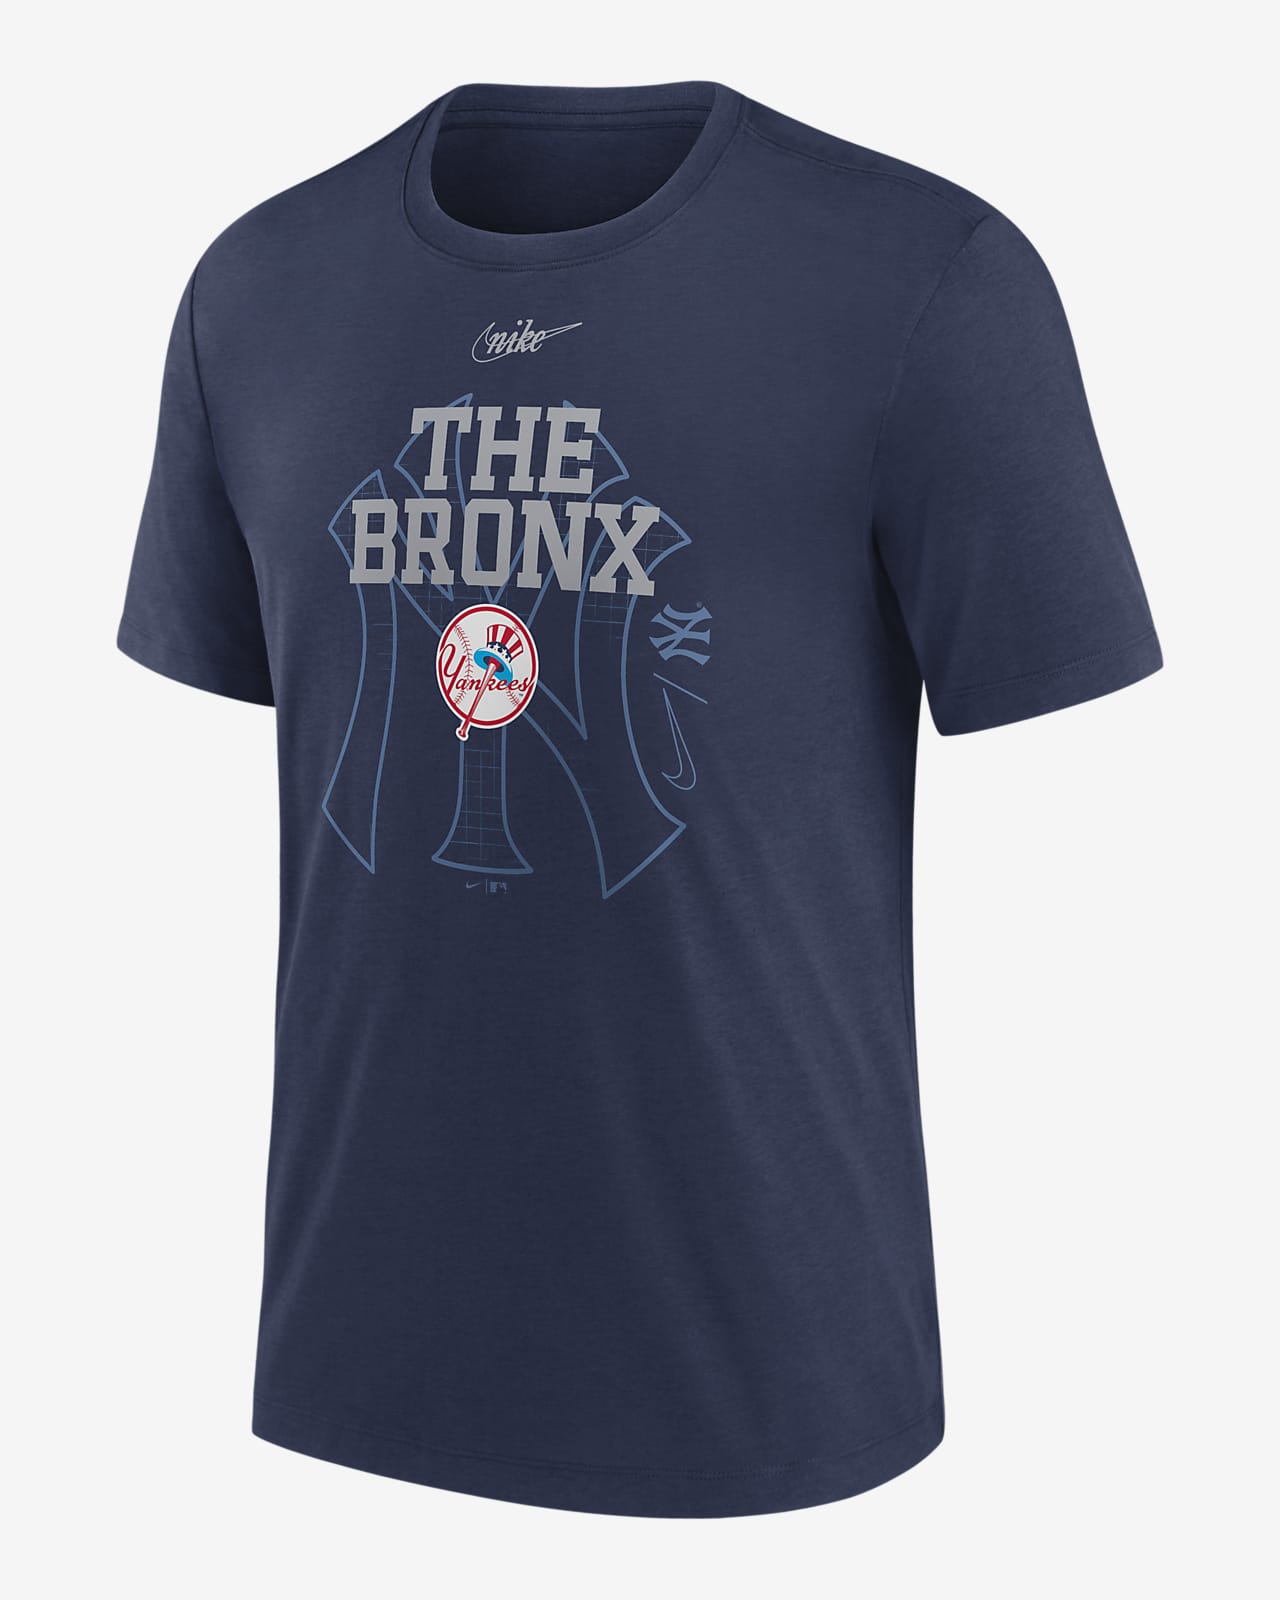 Nike Rewind Retro (MLB New York Yankees) Men's T-Shirt.